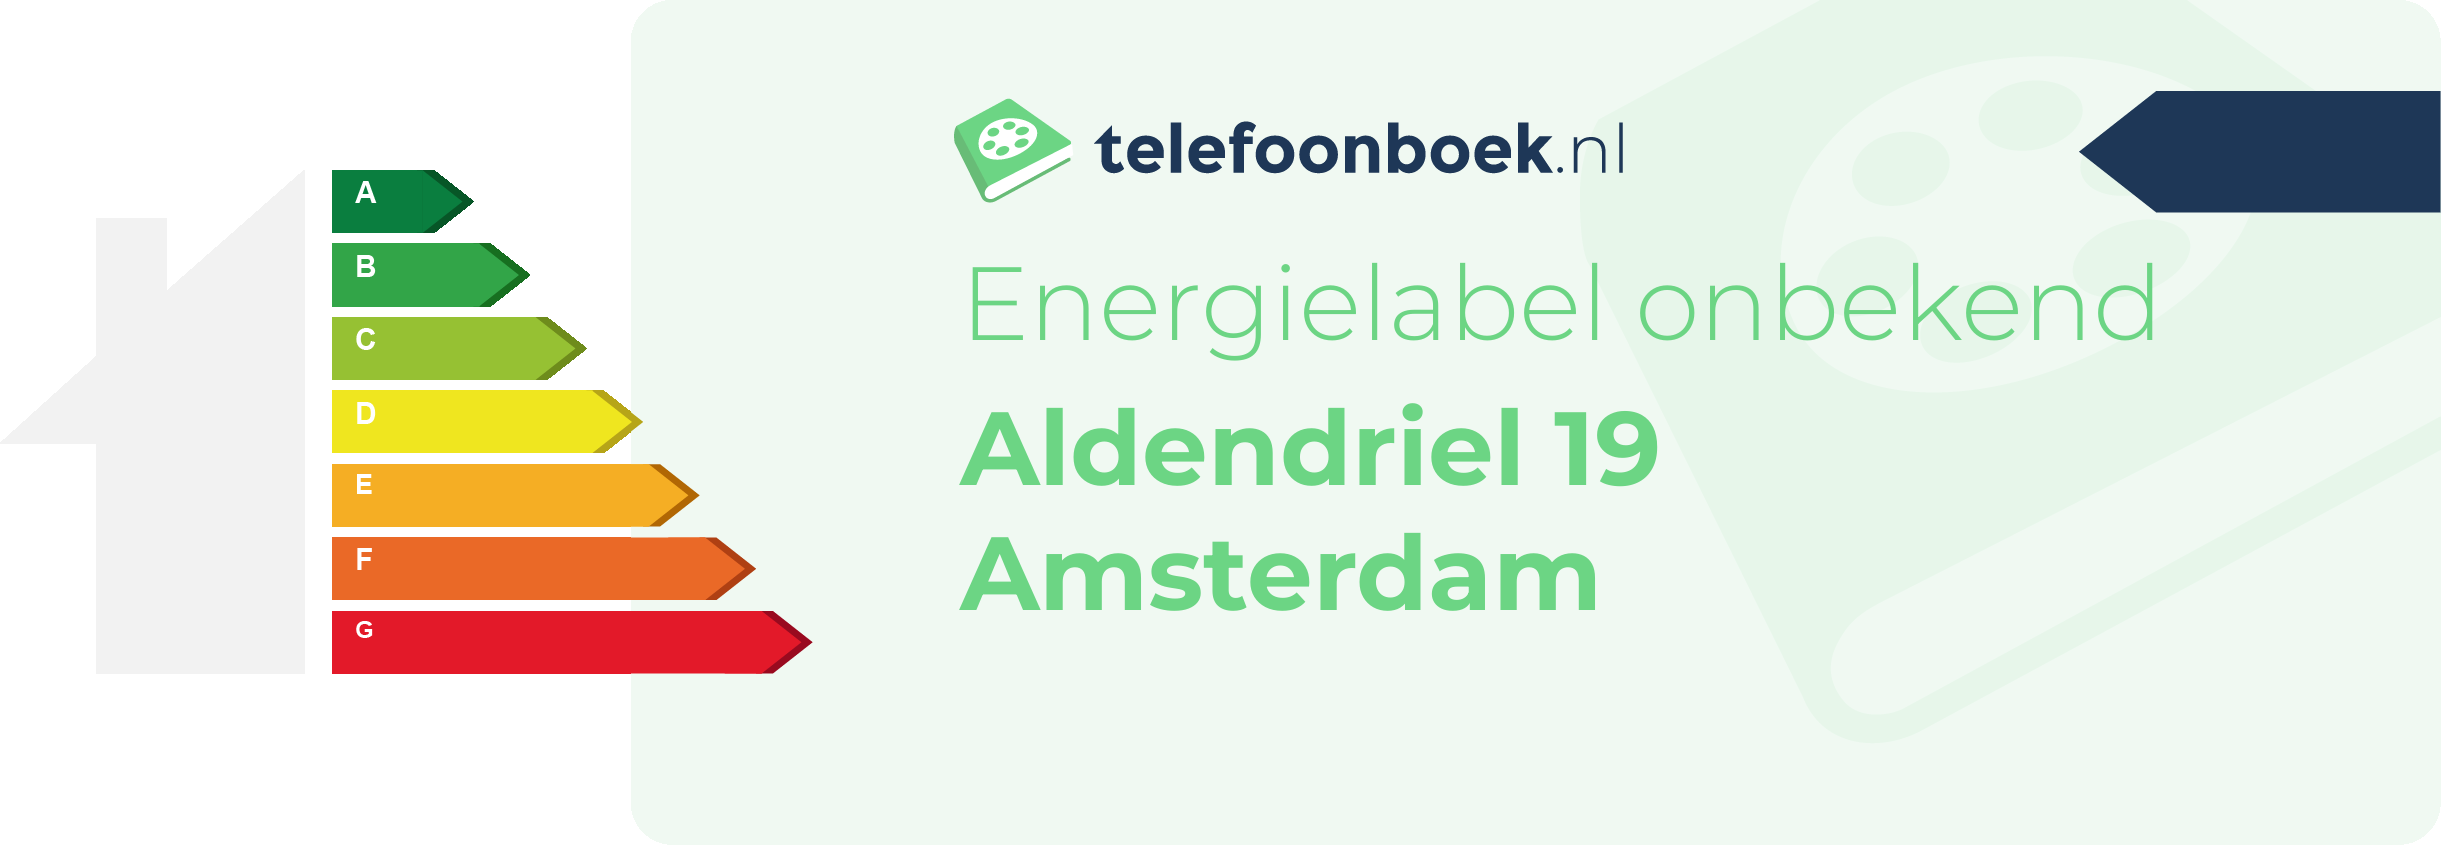 Energielabel Aldendriel 19 Amsterdam